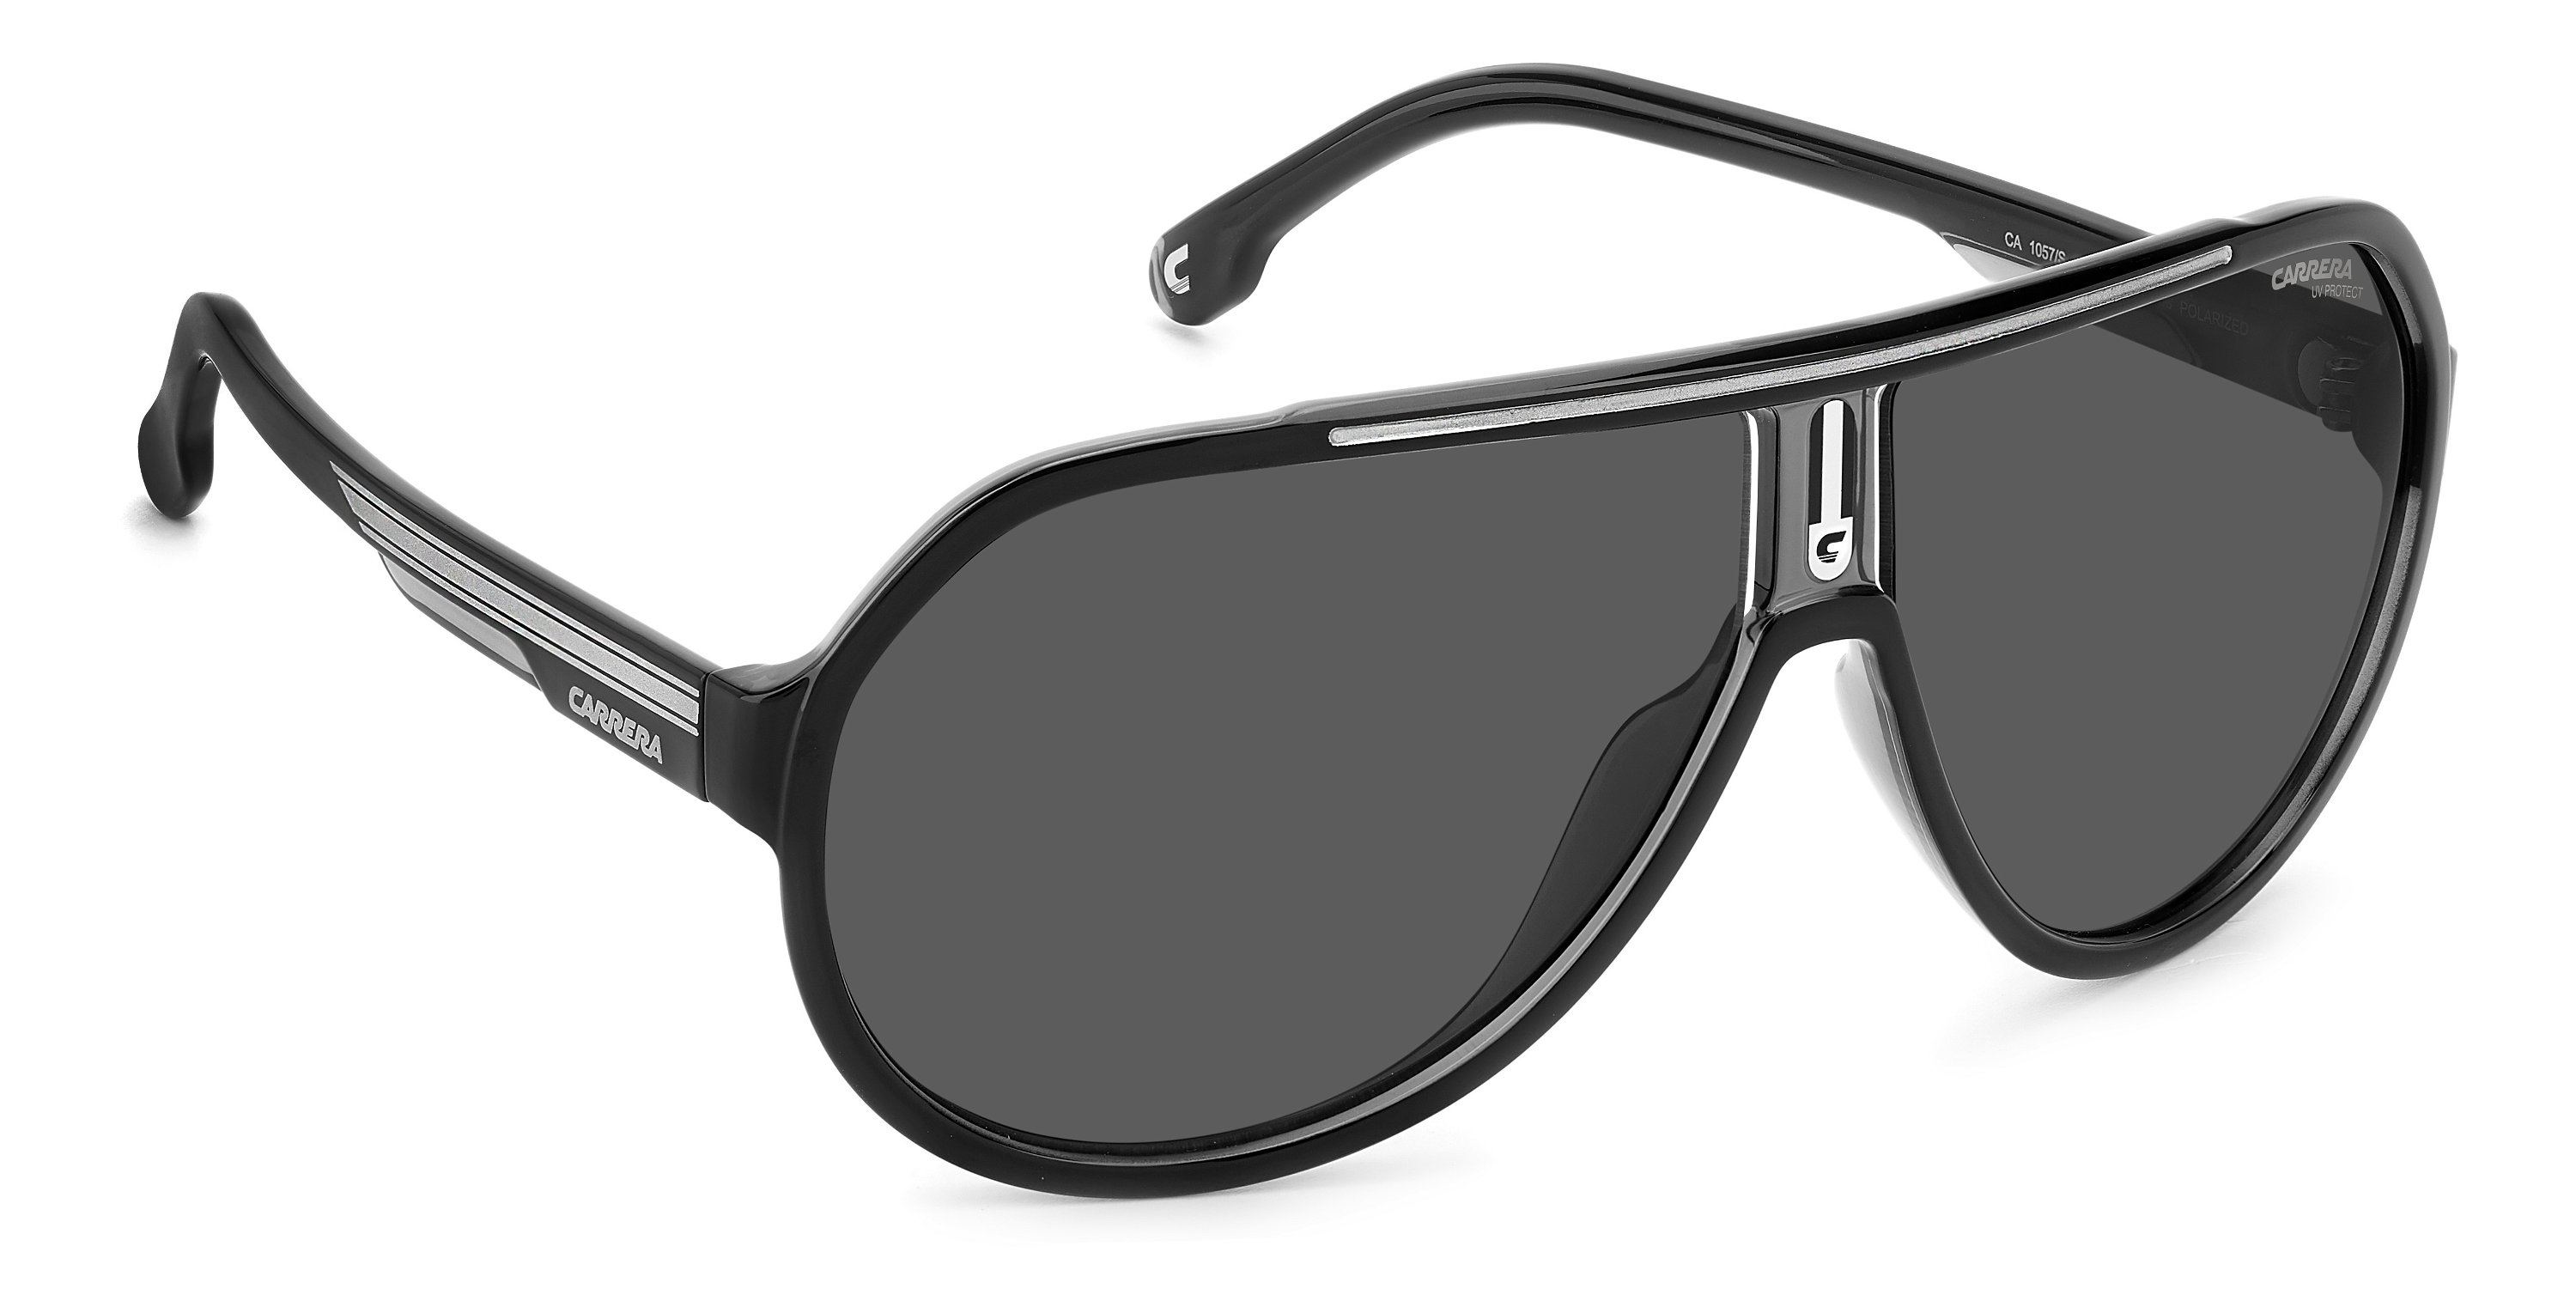 Carrera Sonnenbrille 1057/S 08A schwarz grau